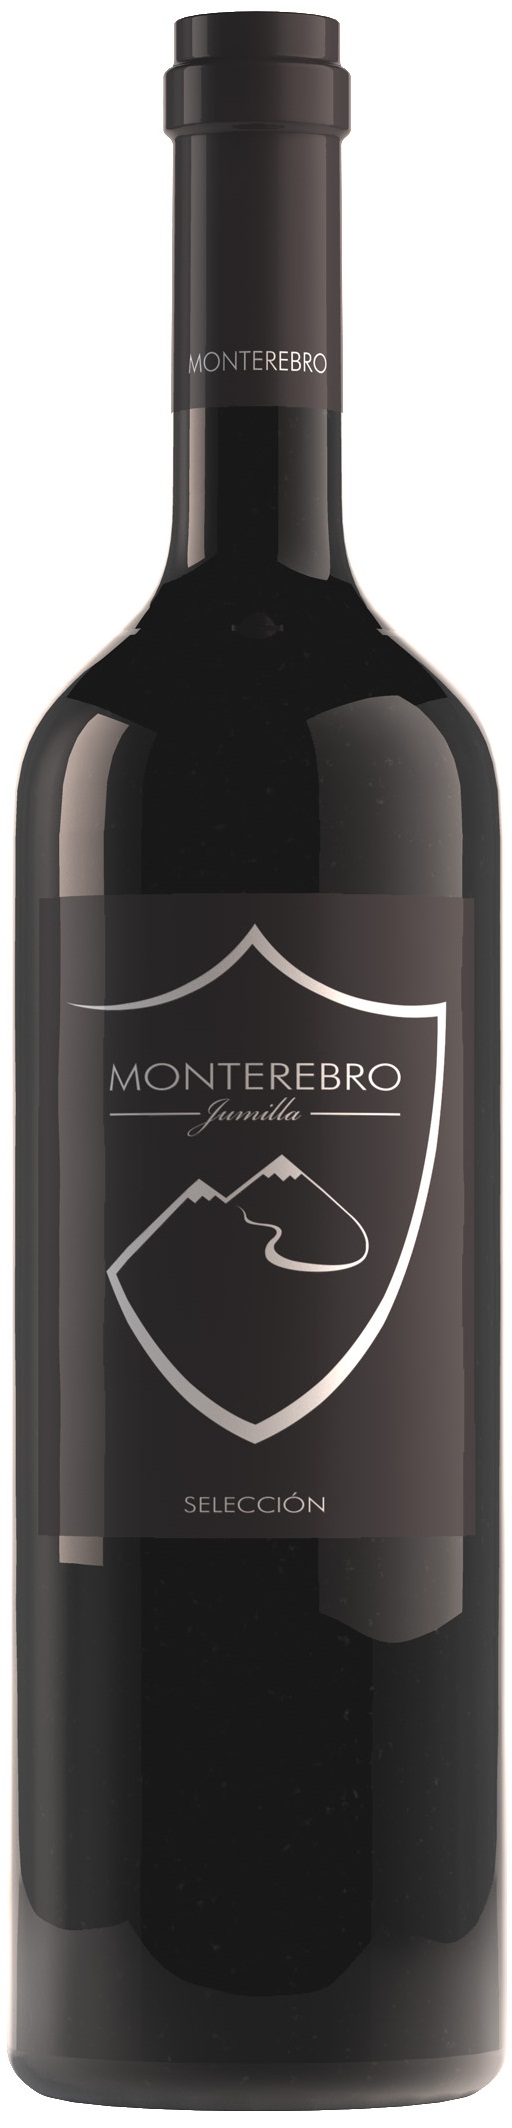 Image of Wine bottle Monterebro Selección